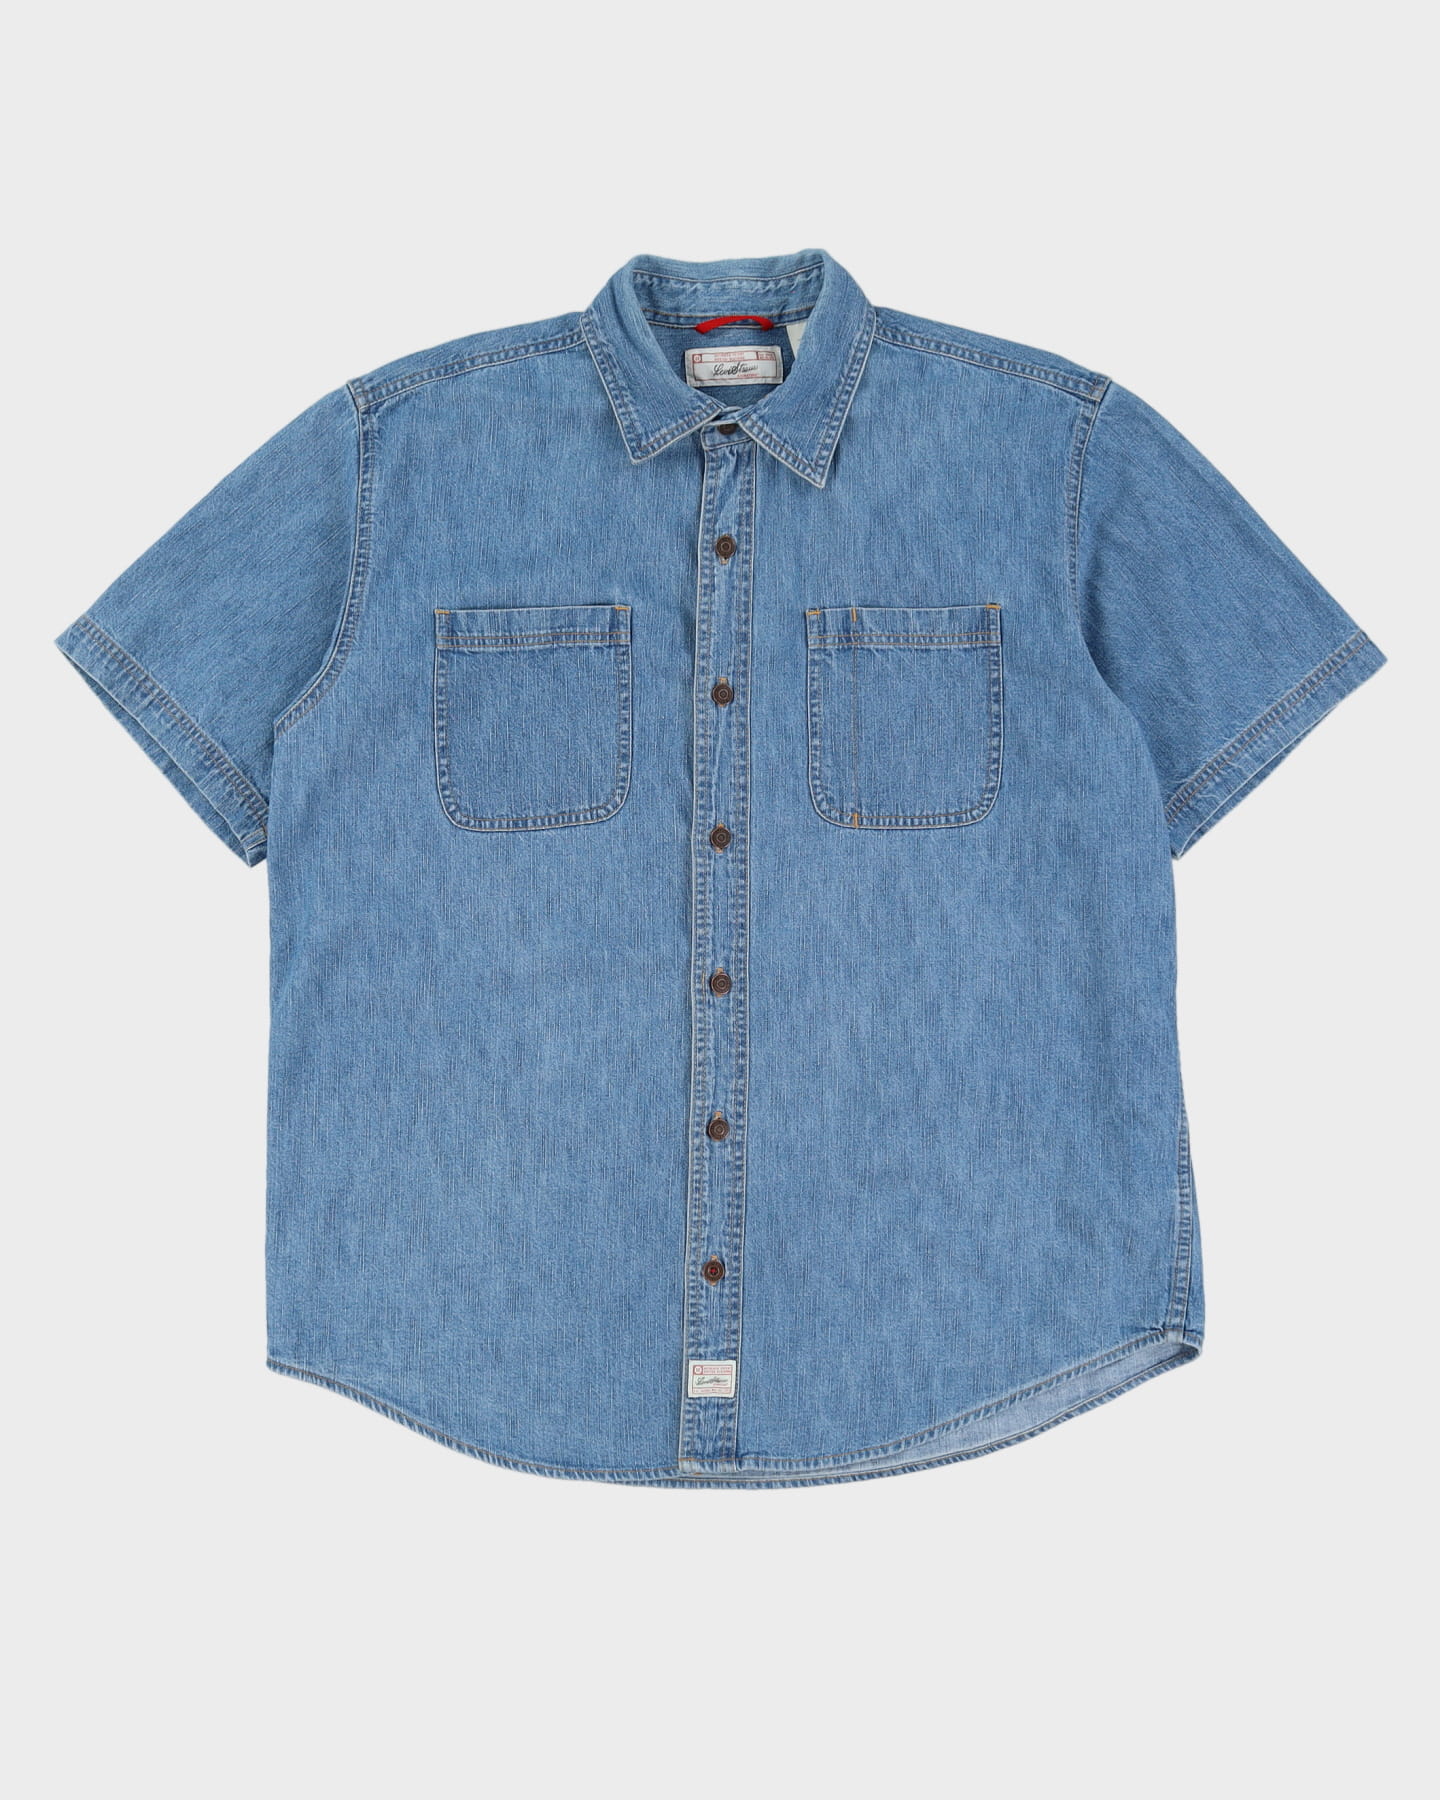 Levi's Blue Denim Shirt - XL